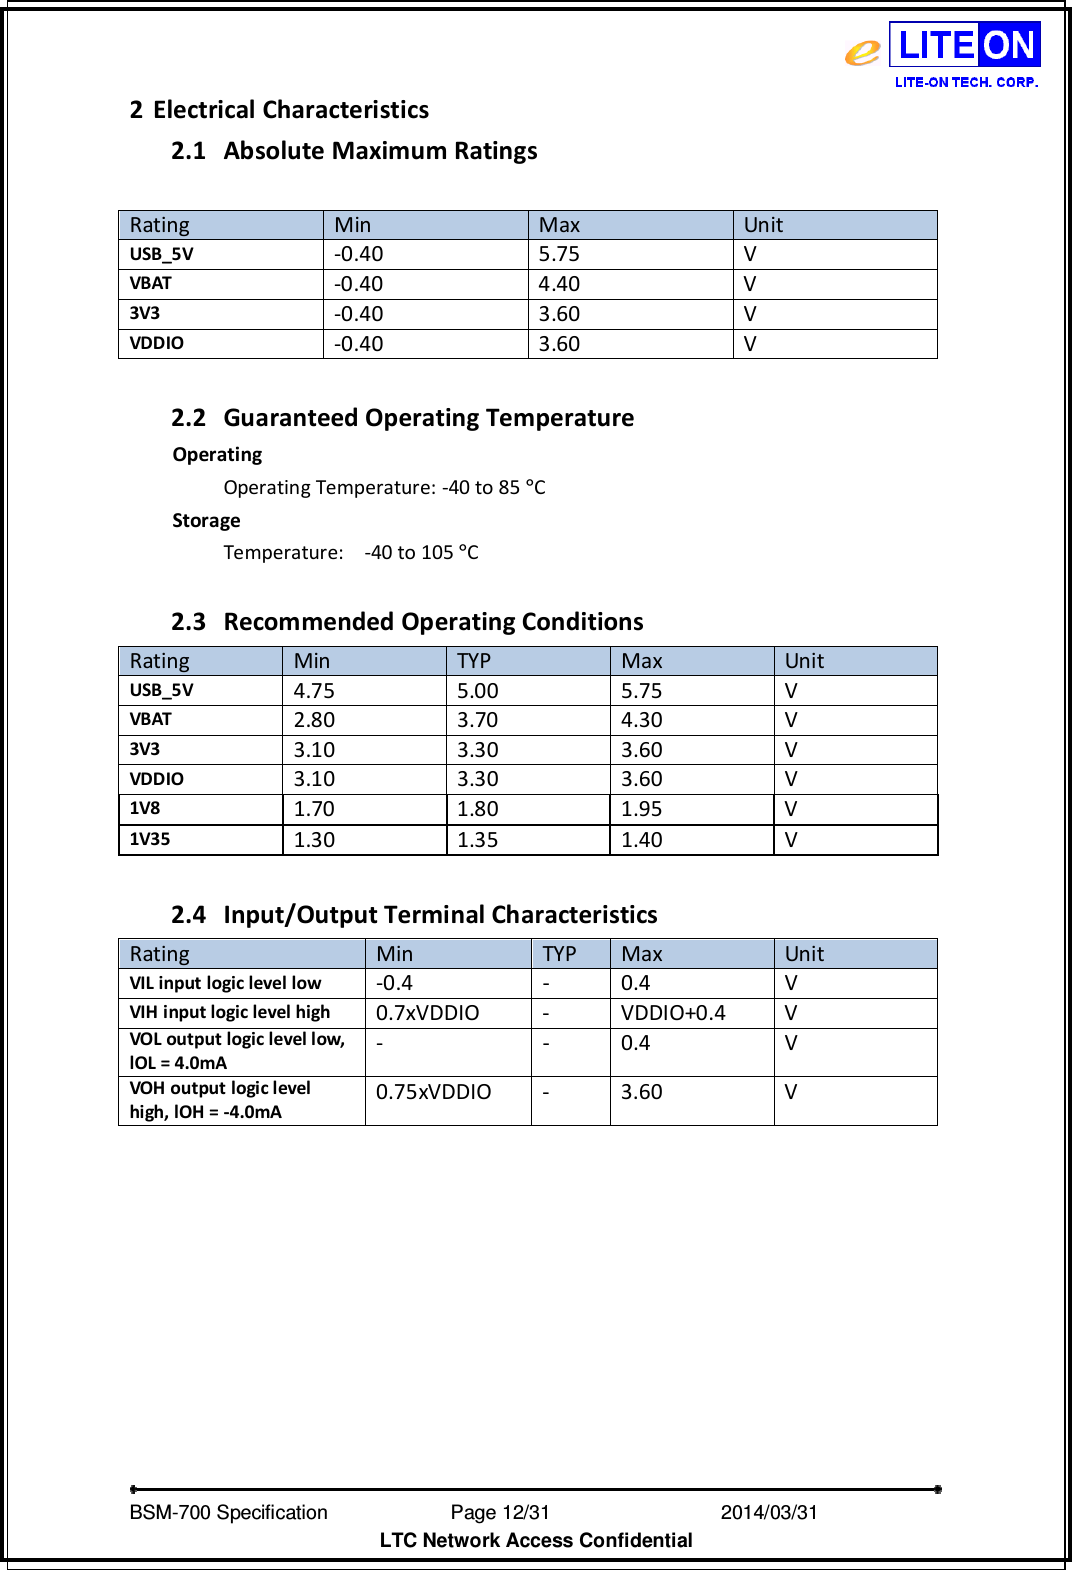   BSM-700 Specification                Page 12/31                           2014/03/31 LTC Network Access Confidential 2 Electrical Characteristics 2.1 Absolute Maximum Ratings  Rating Min Max Unit USB_5V -0.40 5.75 V VBAT  -0.40  4.40  V 3V3 -0.40 3.60 V VDDIO -0.40 3.60 V  2.2 Guaranteed Operating Temperature Operating Operating Temperature: -40 to 85 °C   Storage Temperature:  -40 to 105 °C  2.3 Recommended Operating Conditions Rating  Min  TYP  Max  Unit USB_5V 4.75 5.00 5.75 V VBAT 2.80 3.70 4.30 V 3V3 3.10 3.30 3.60 V VDDIO 3.10 3.30 3.60 V 1V8  1.70  1.80  1.95  V 1V35 1.30 1.35 1.40 V  2.4 Input/Output Terminal Characteristics Rating Min TYP Max Unit VIL input logic level low -0.4 - 0.4 V VIH input logic level high  0.7xVDDIO  -  VDDIO+0.4  V VOL output logic level low, lOL = 4.0mA - - 0.4 V VOH output logic level high, lOH = -4.0mA 0.75xVDDIO  -  3.60  V  